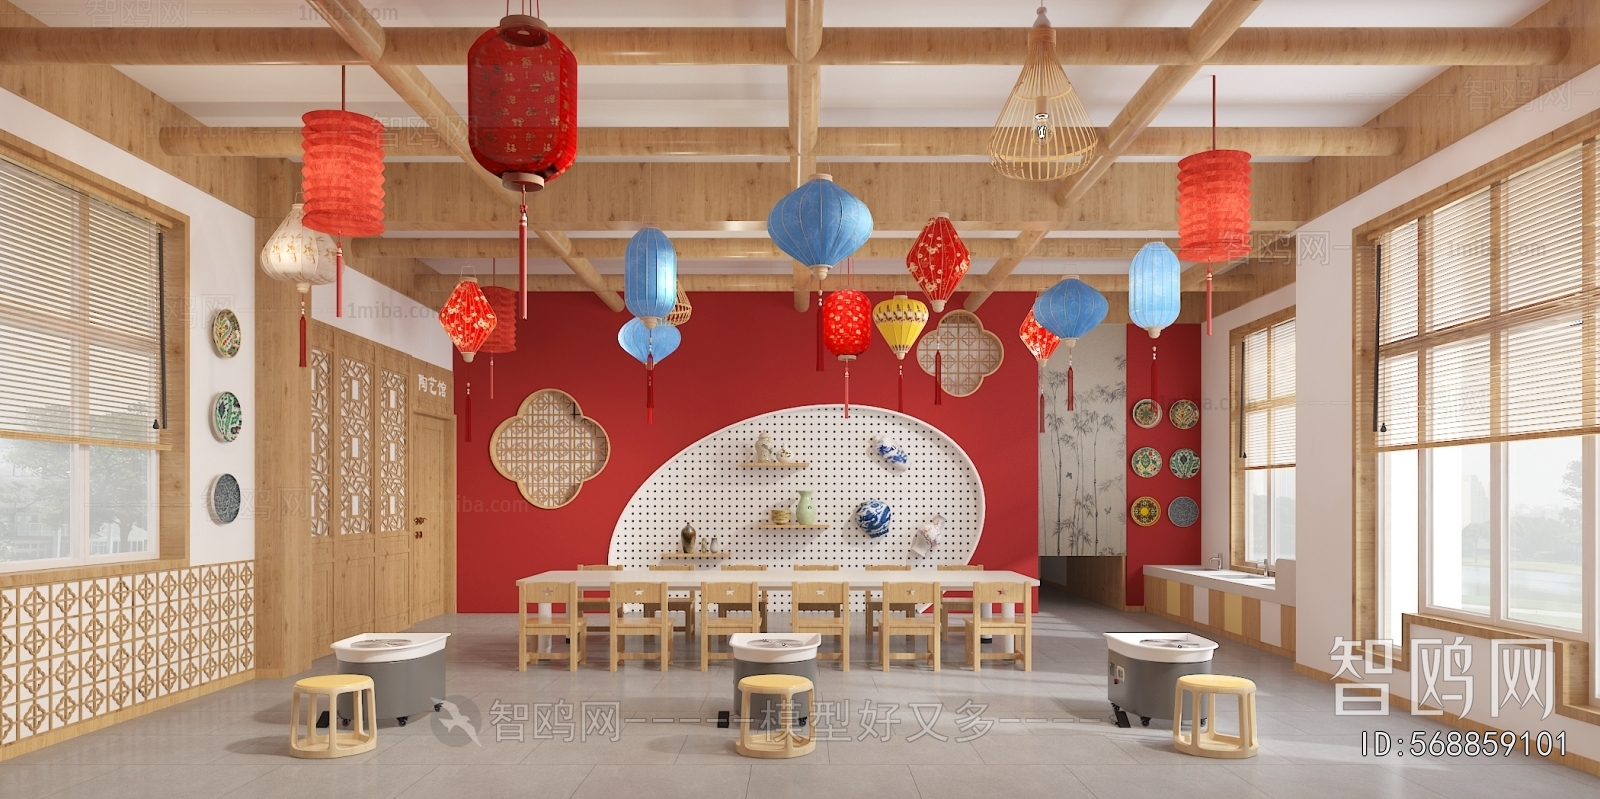 Chinese Style Kindergarten Classrooms